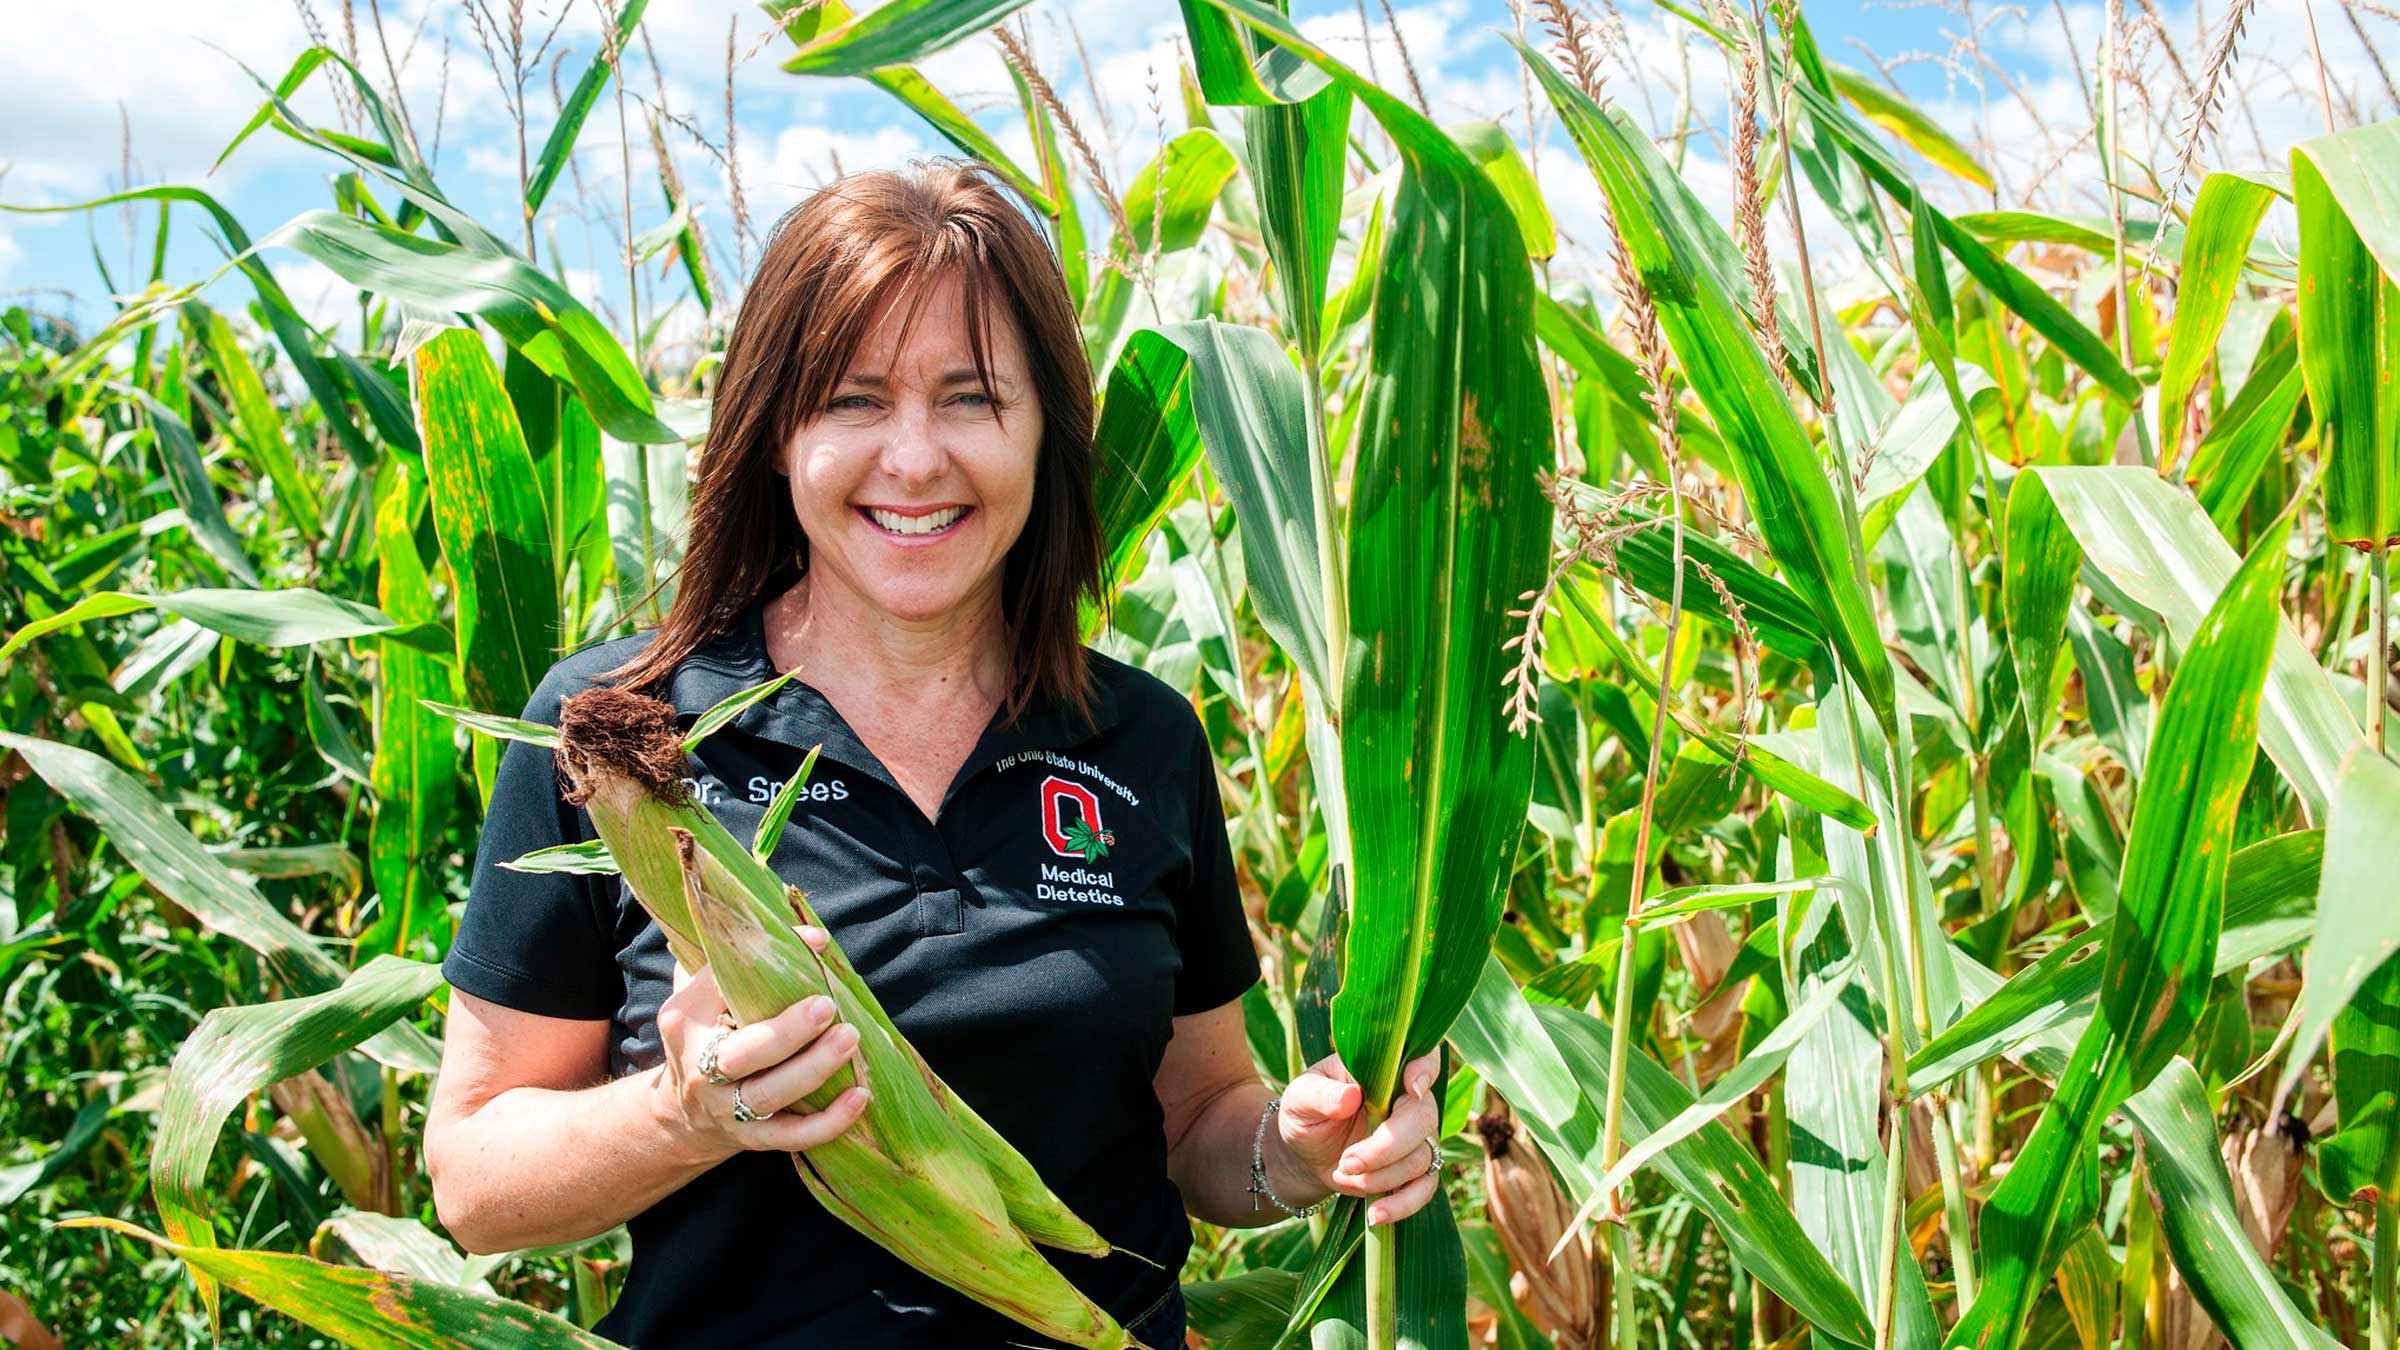 Dr. Spees harvesting corn